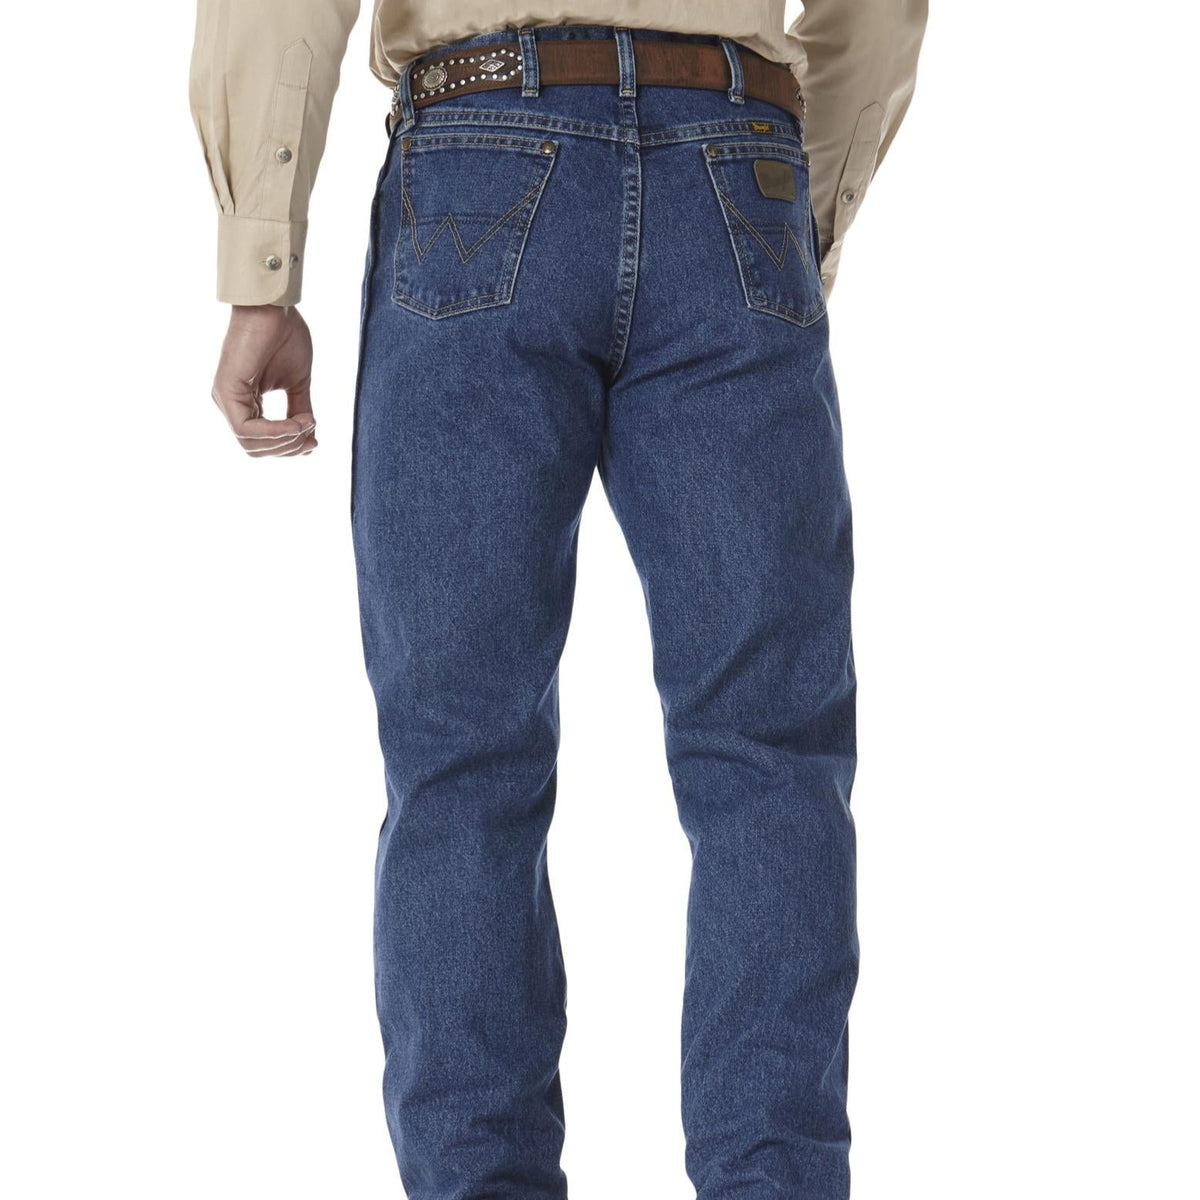 Wrangler Men's George Strait Cowboy Cut Original Fit Jean in Heavyweight Stone Denim